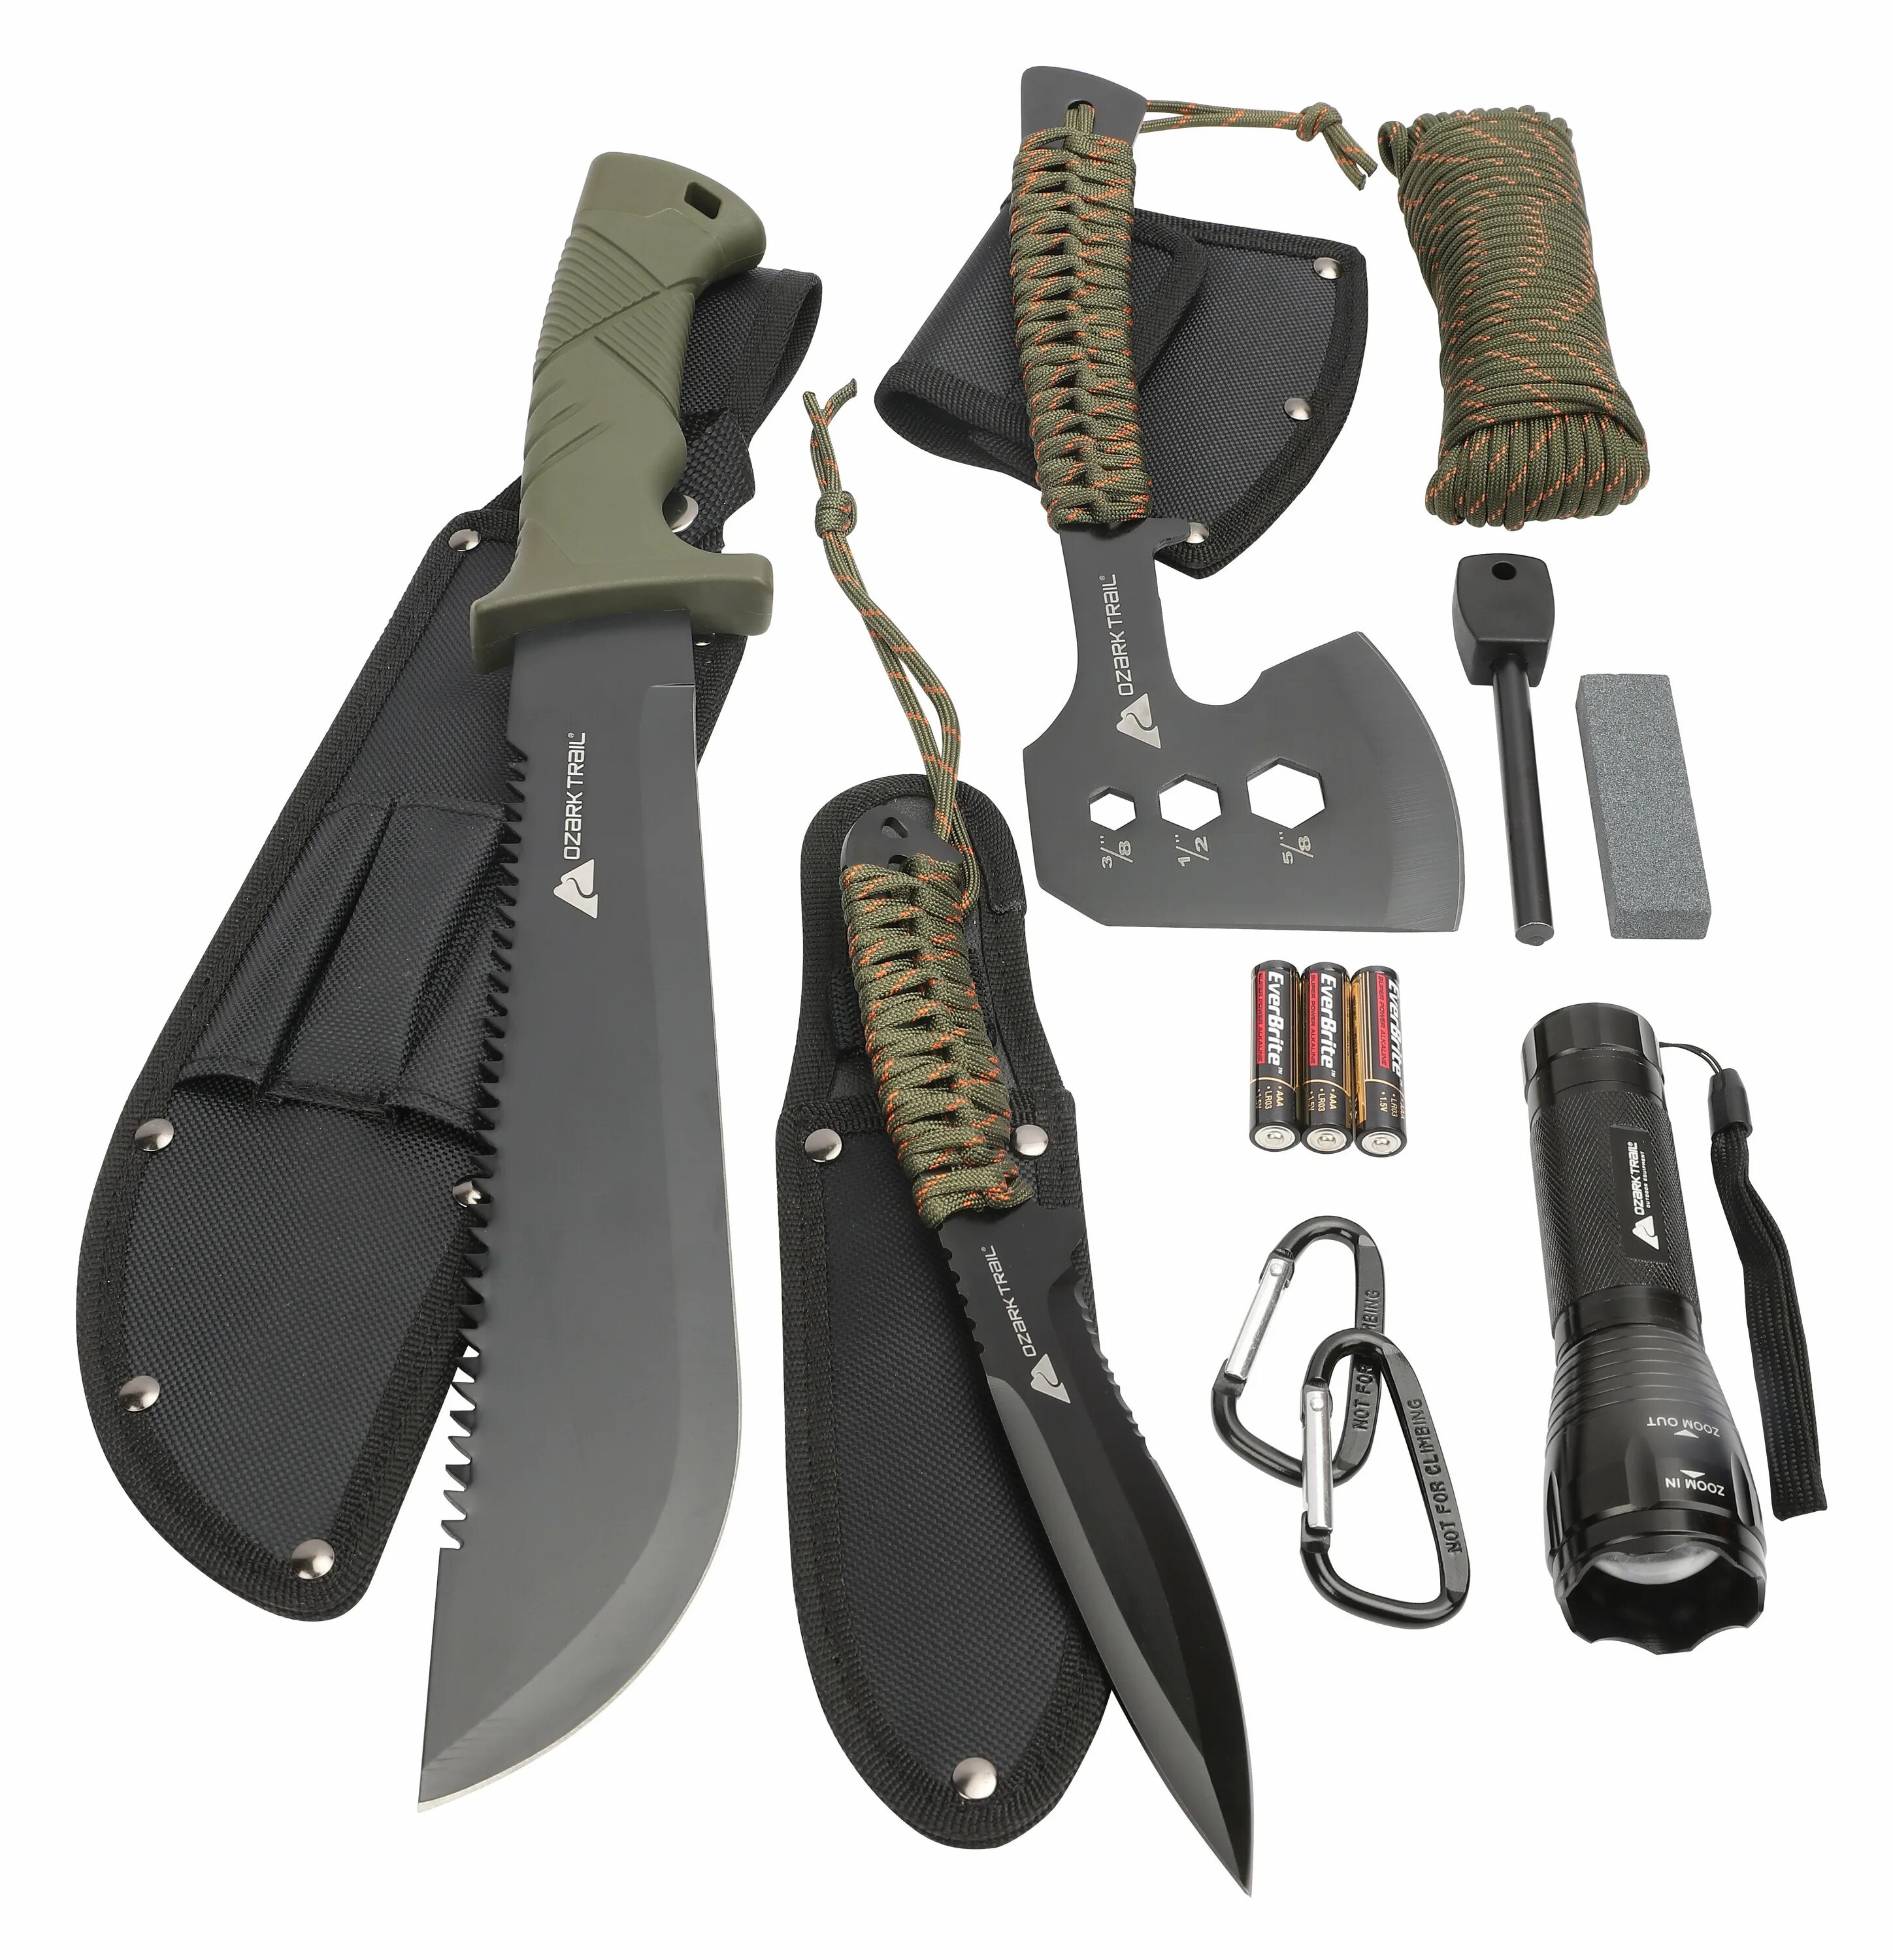 Нож выживания Survival Knife. Ozark Trail нож. Нож выживальщика Survival Kit Knife. Тактический мультитул - нож Justar Tools.